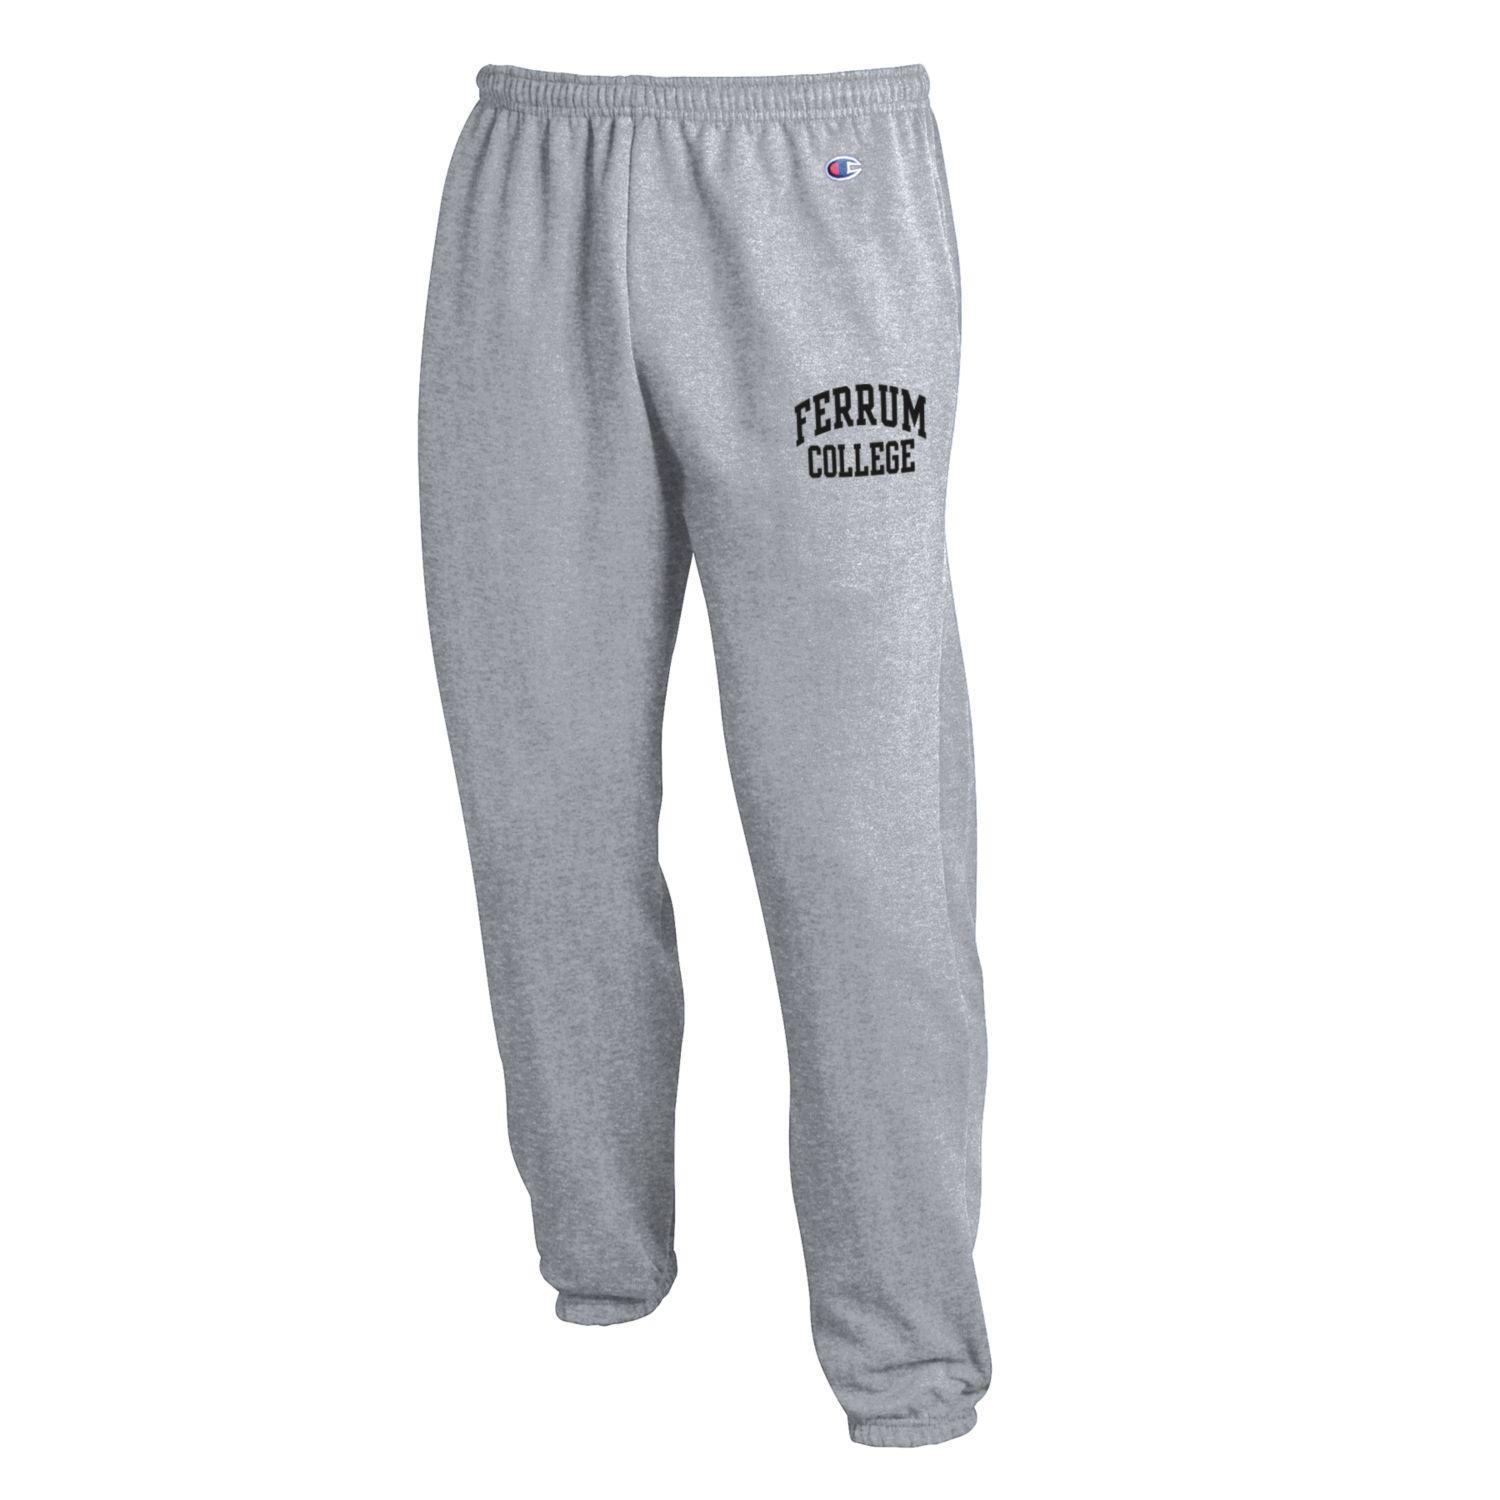 University of Pennsylvania Penn Champion Banded Bottom Pant Sweatpants